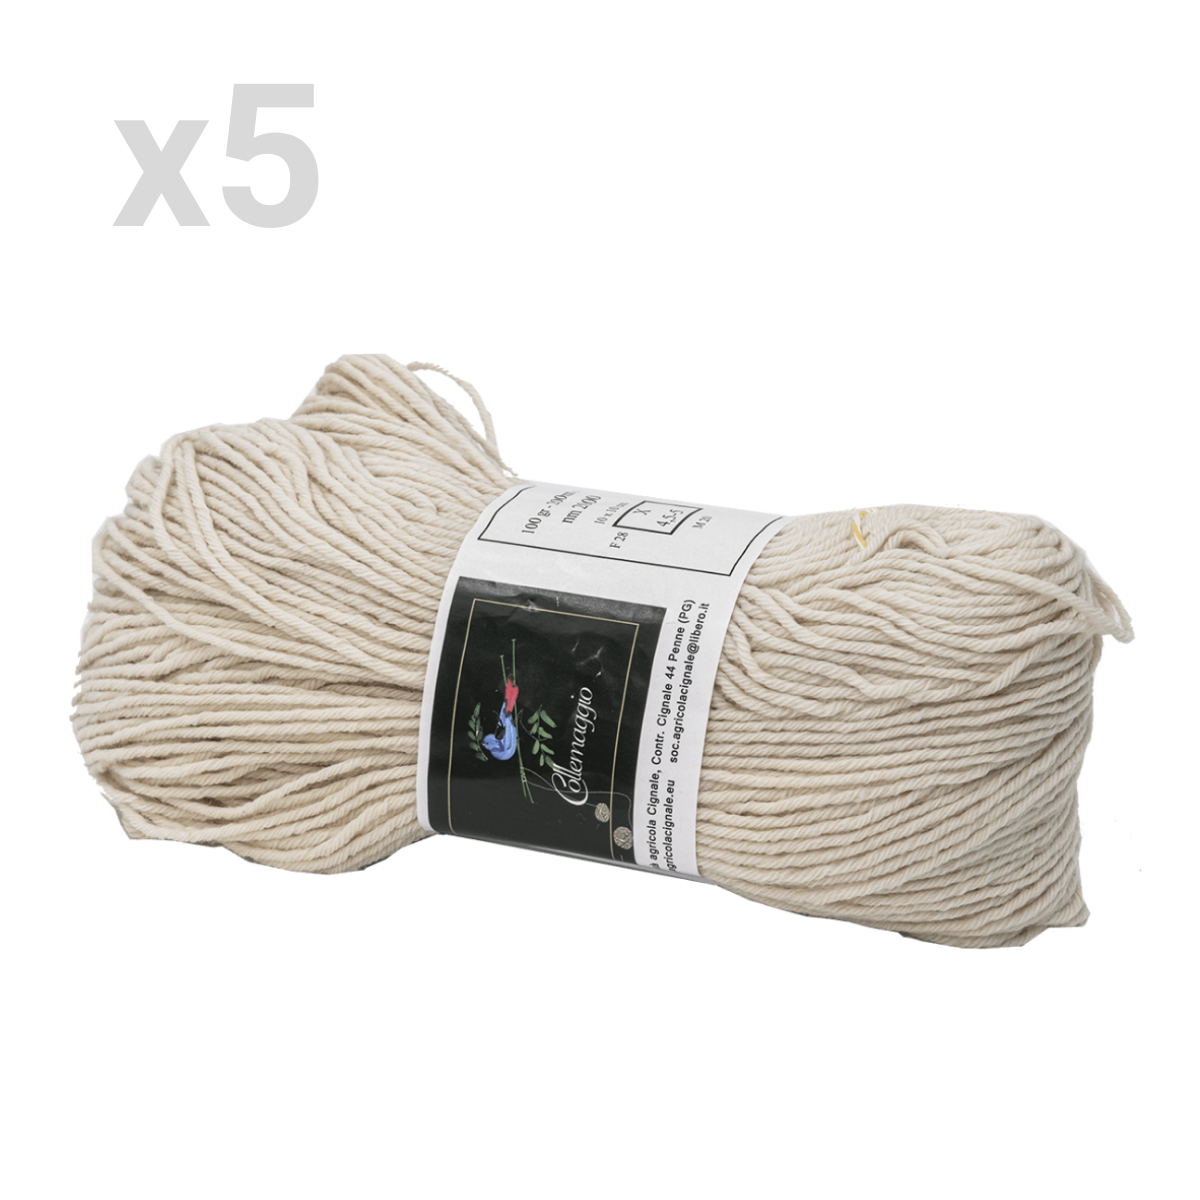 Gomitoli di lana, 5x100g: acquista online Gomitoli di lana, 5x100g